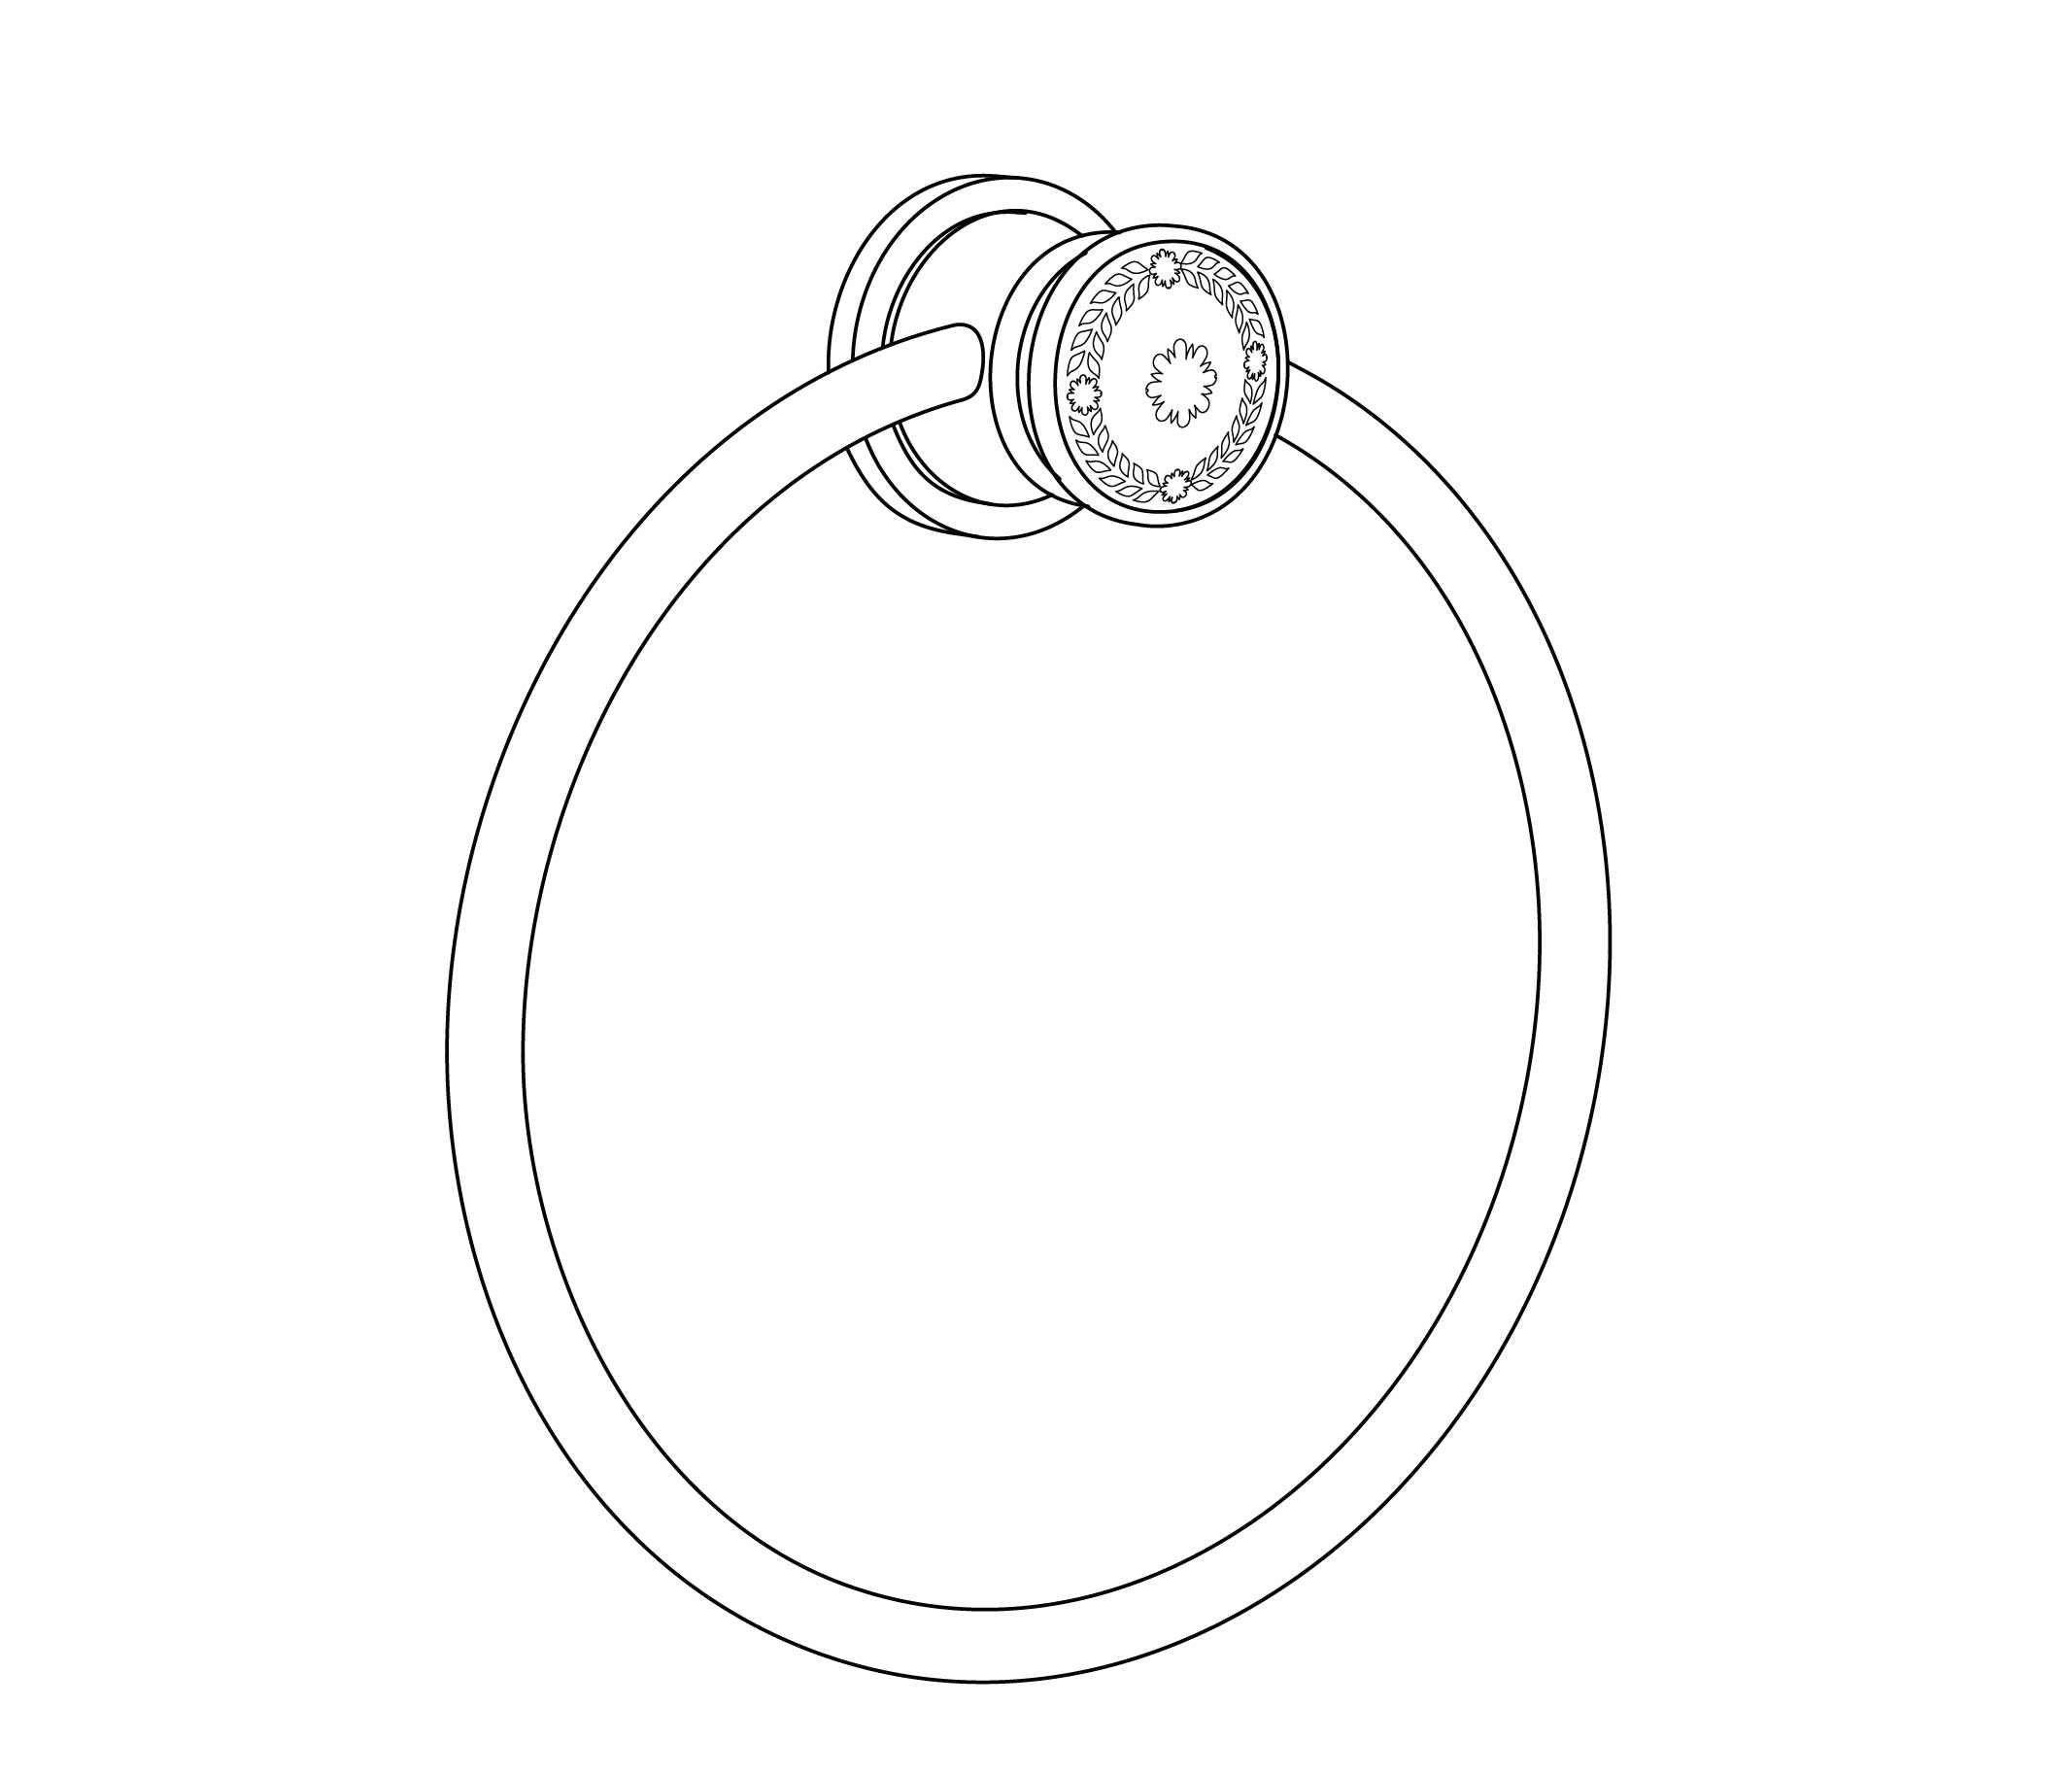 S196-510 Porte-serviette anneau